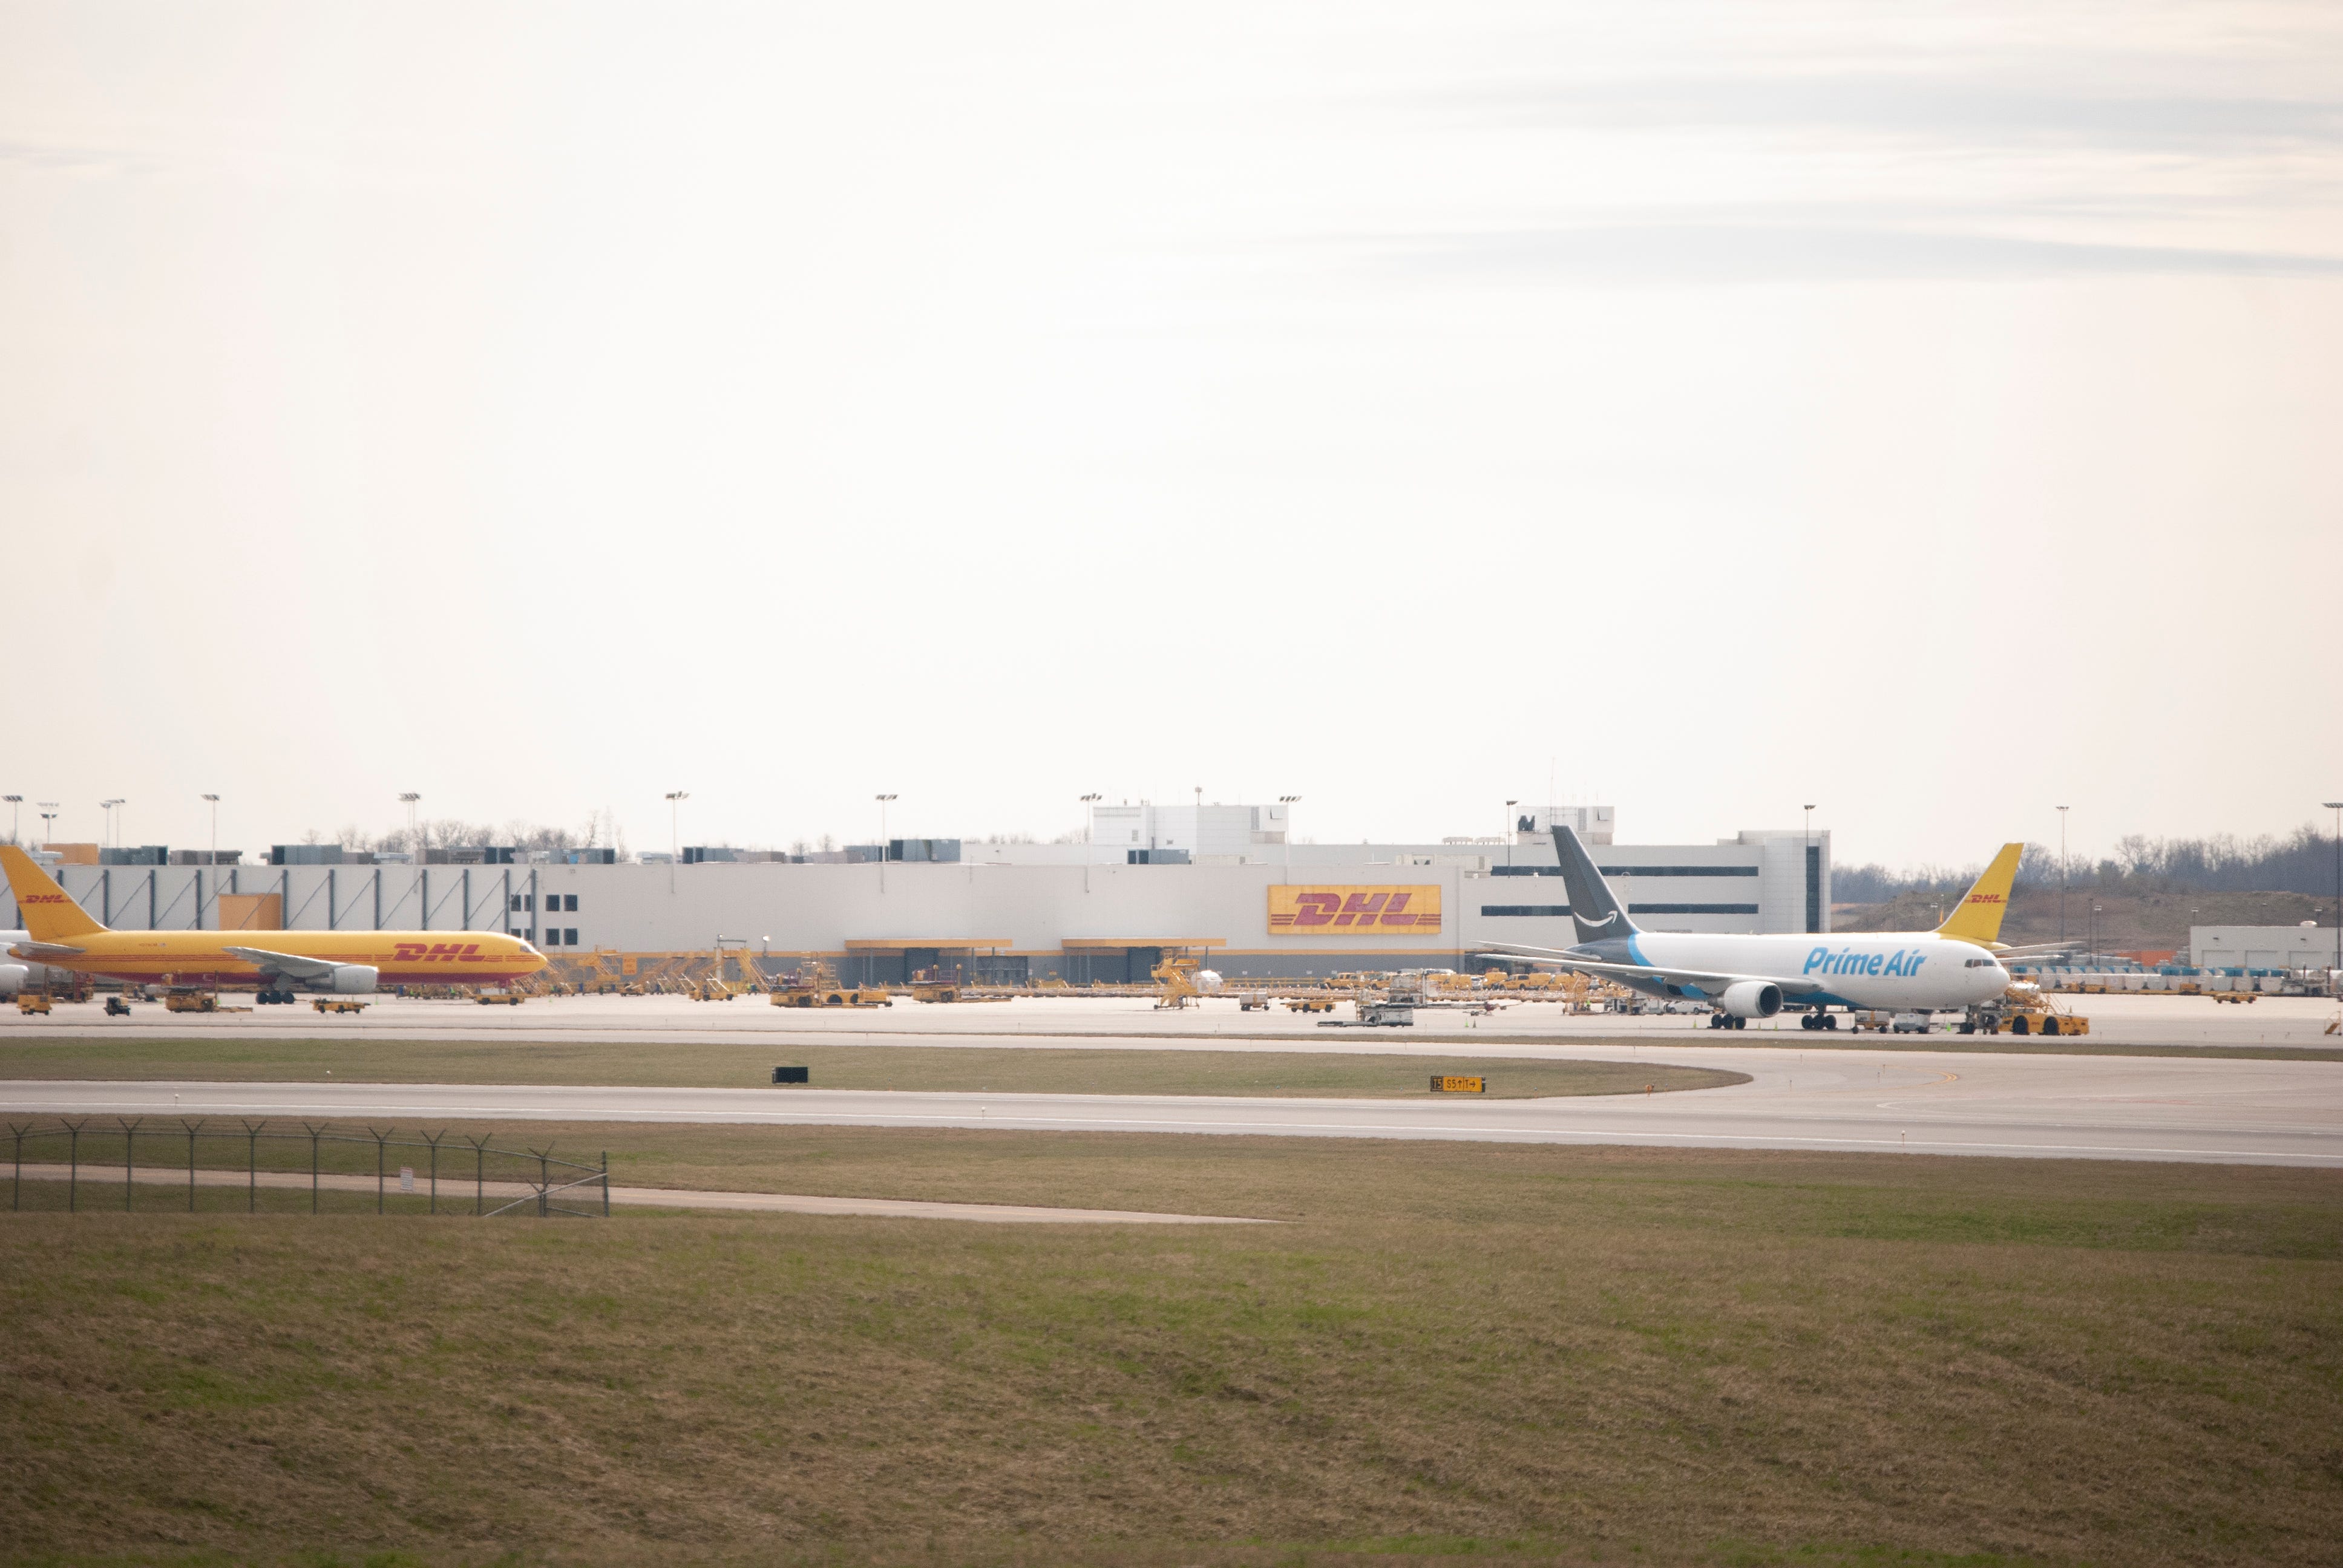 A Prime Air jet at DHL's cargo hub in April 2019 at CVG.